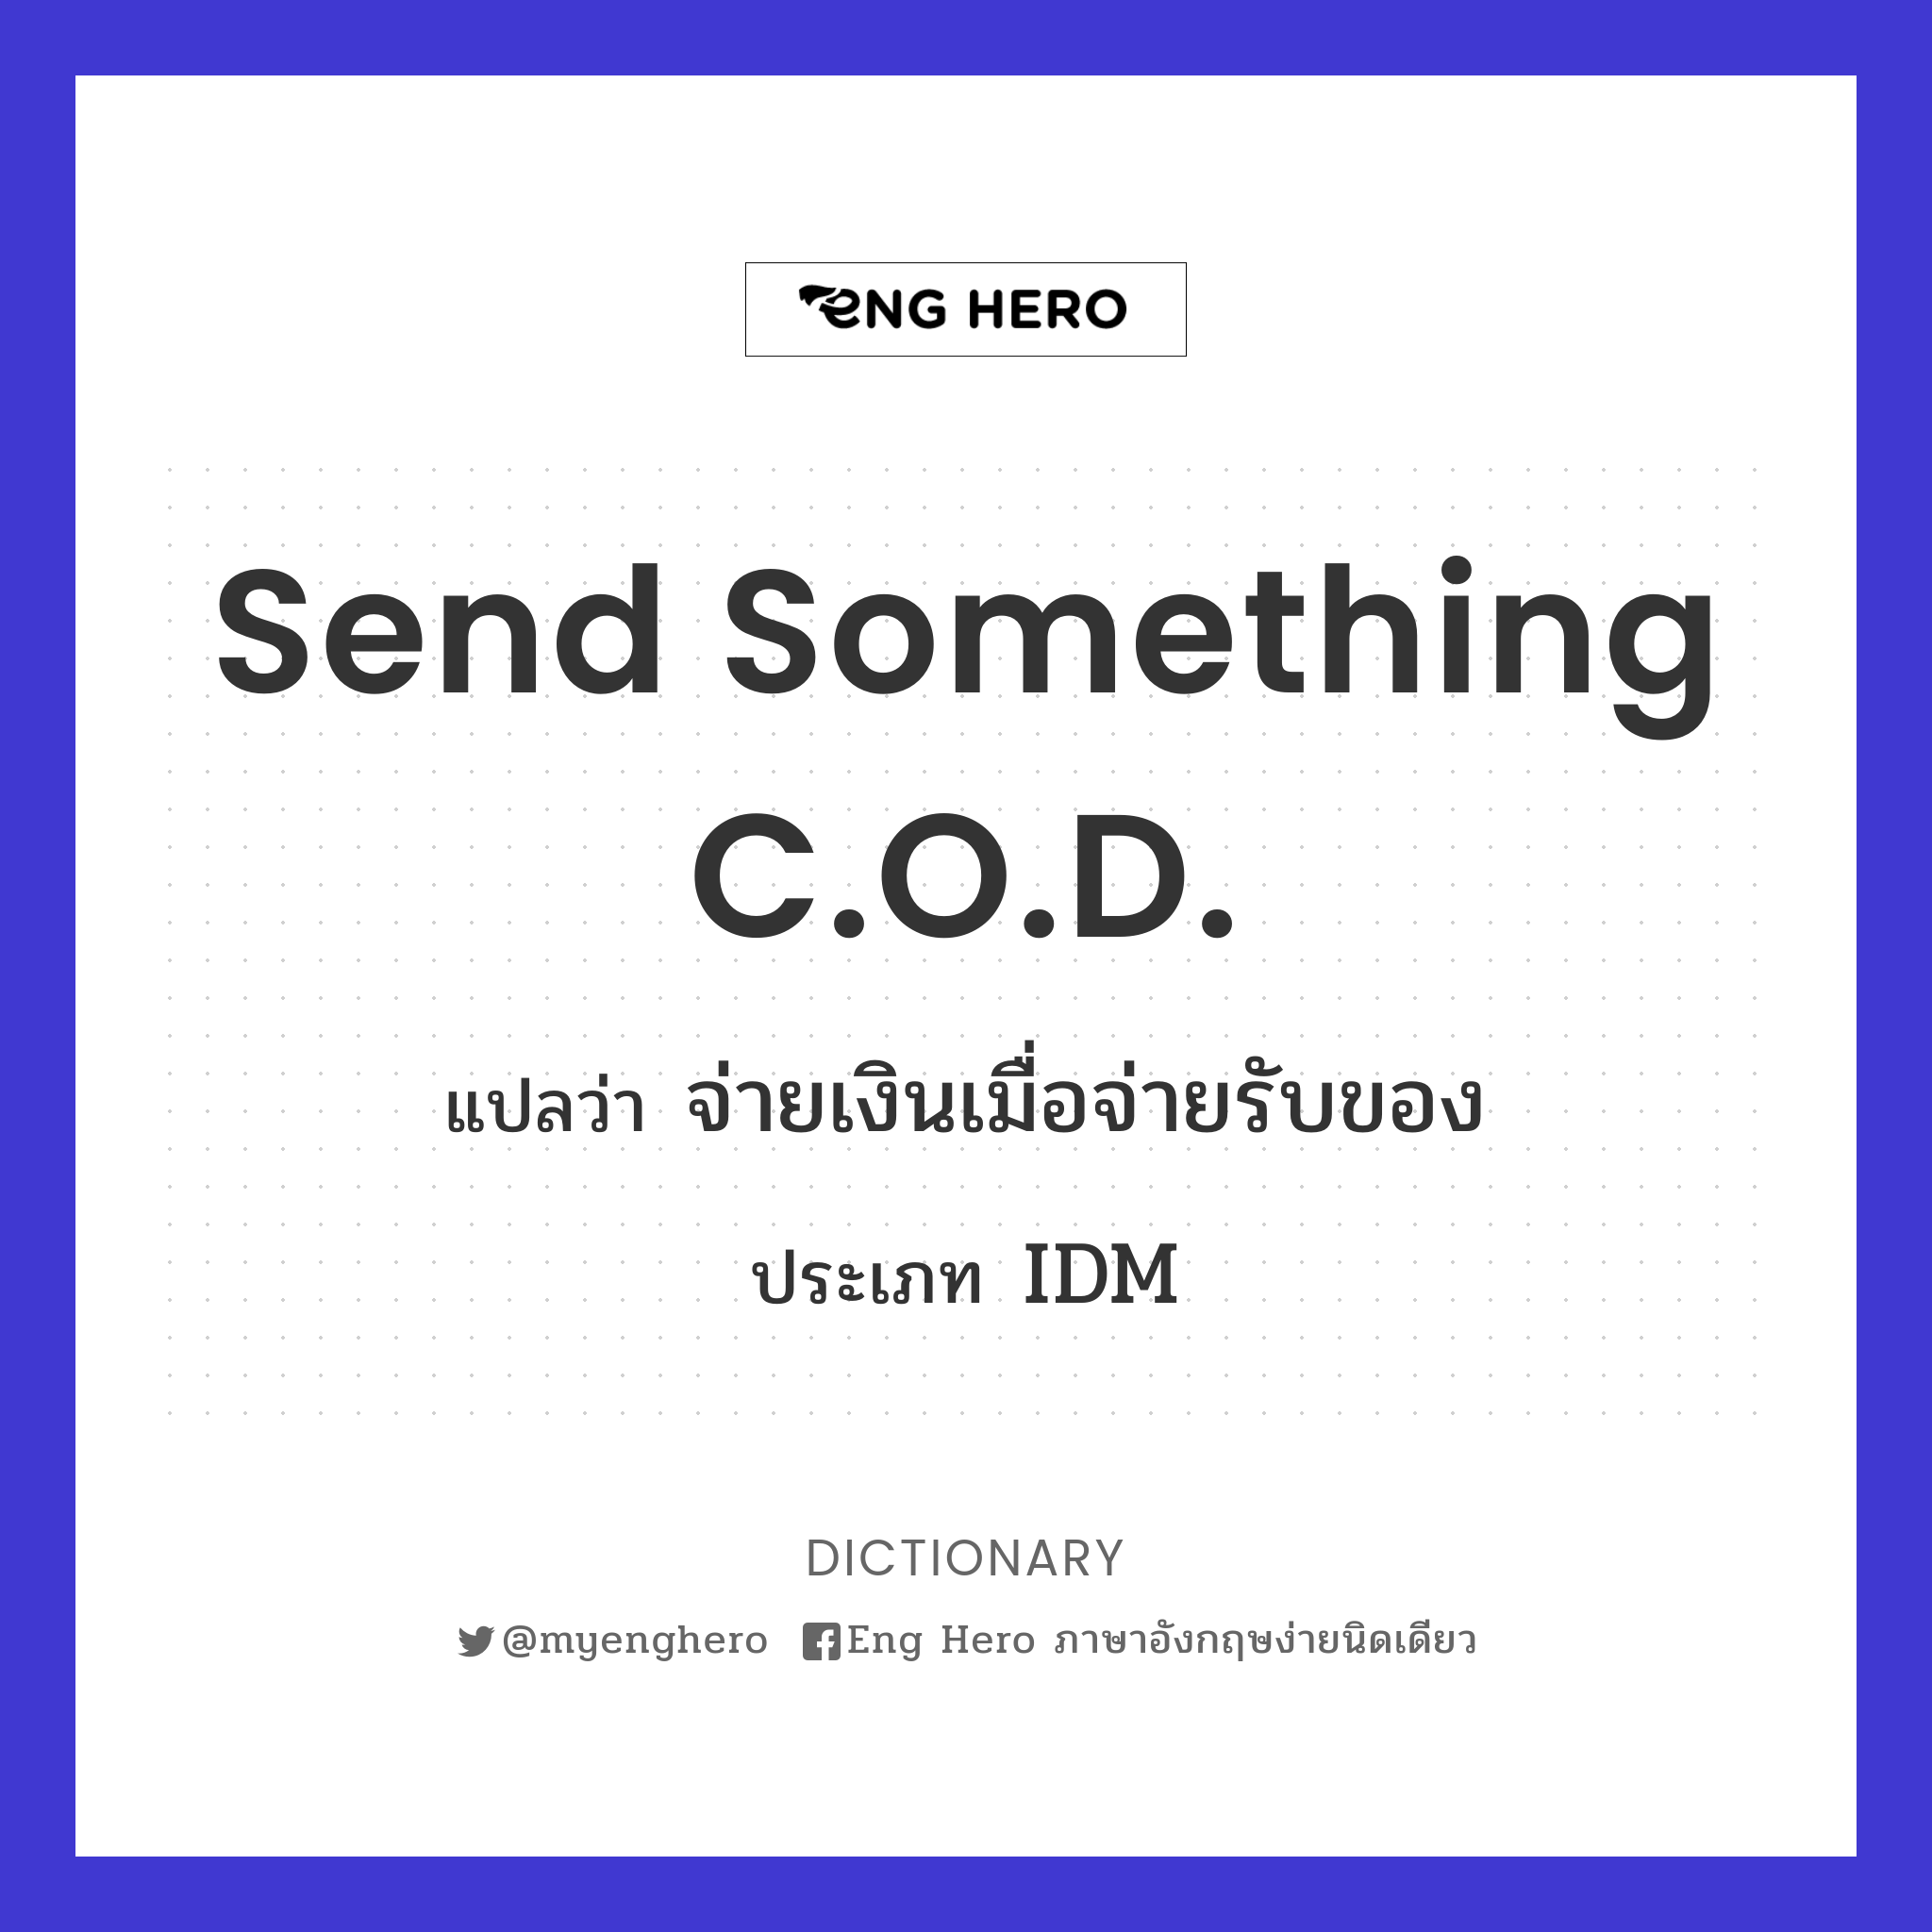 send something C.O.D.